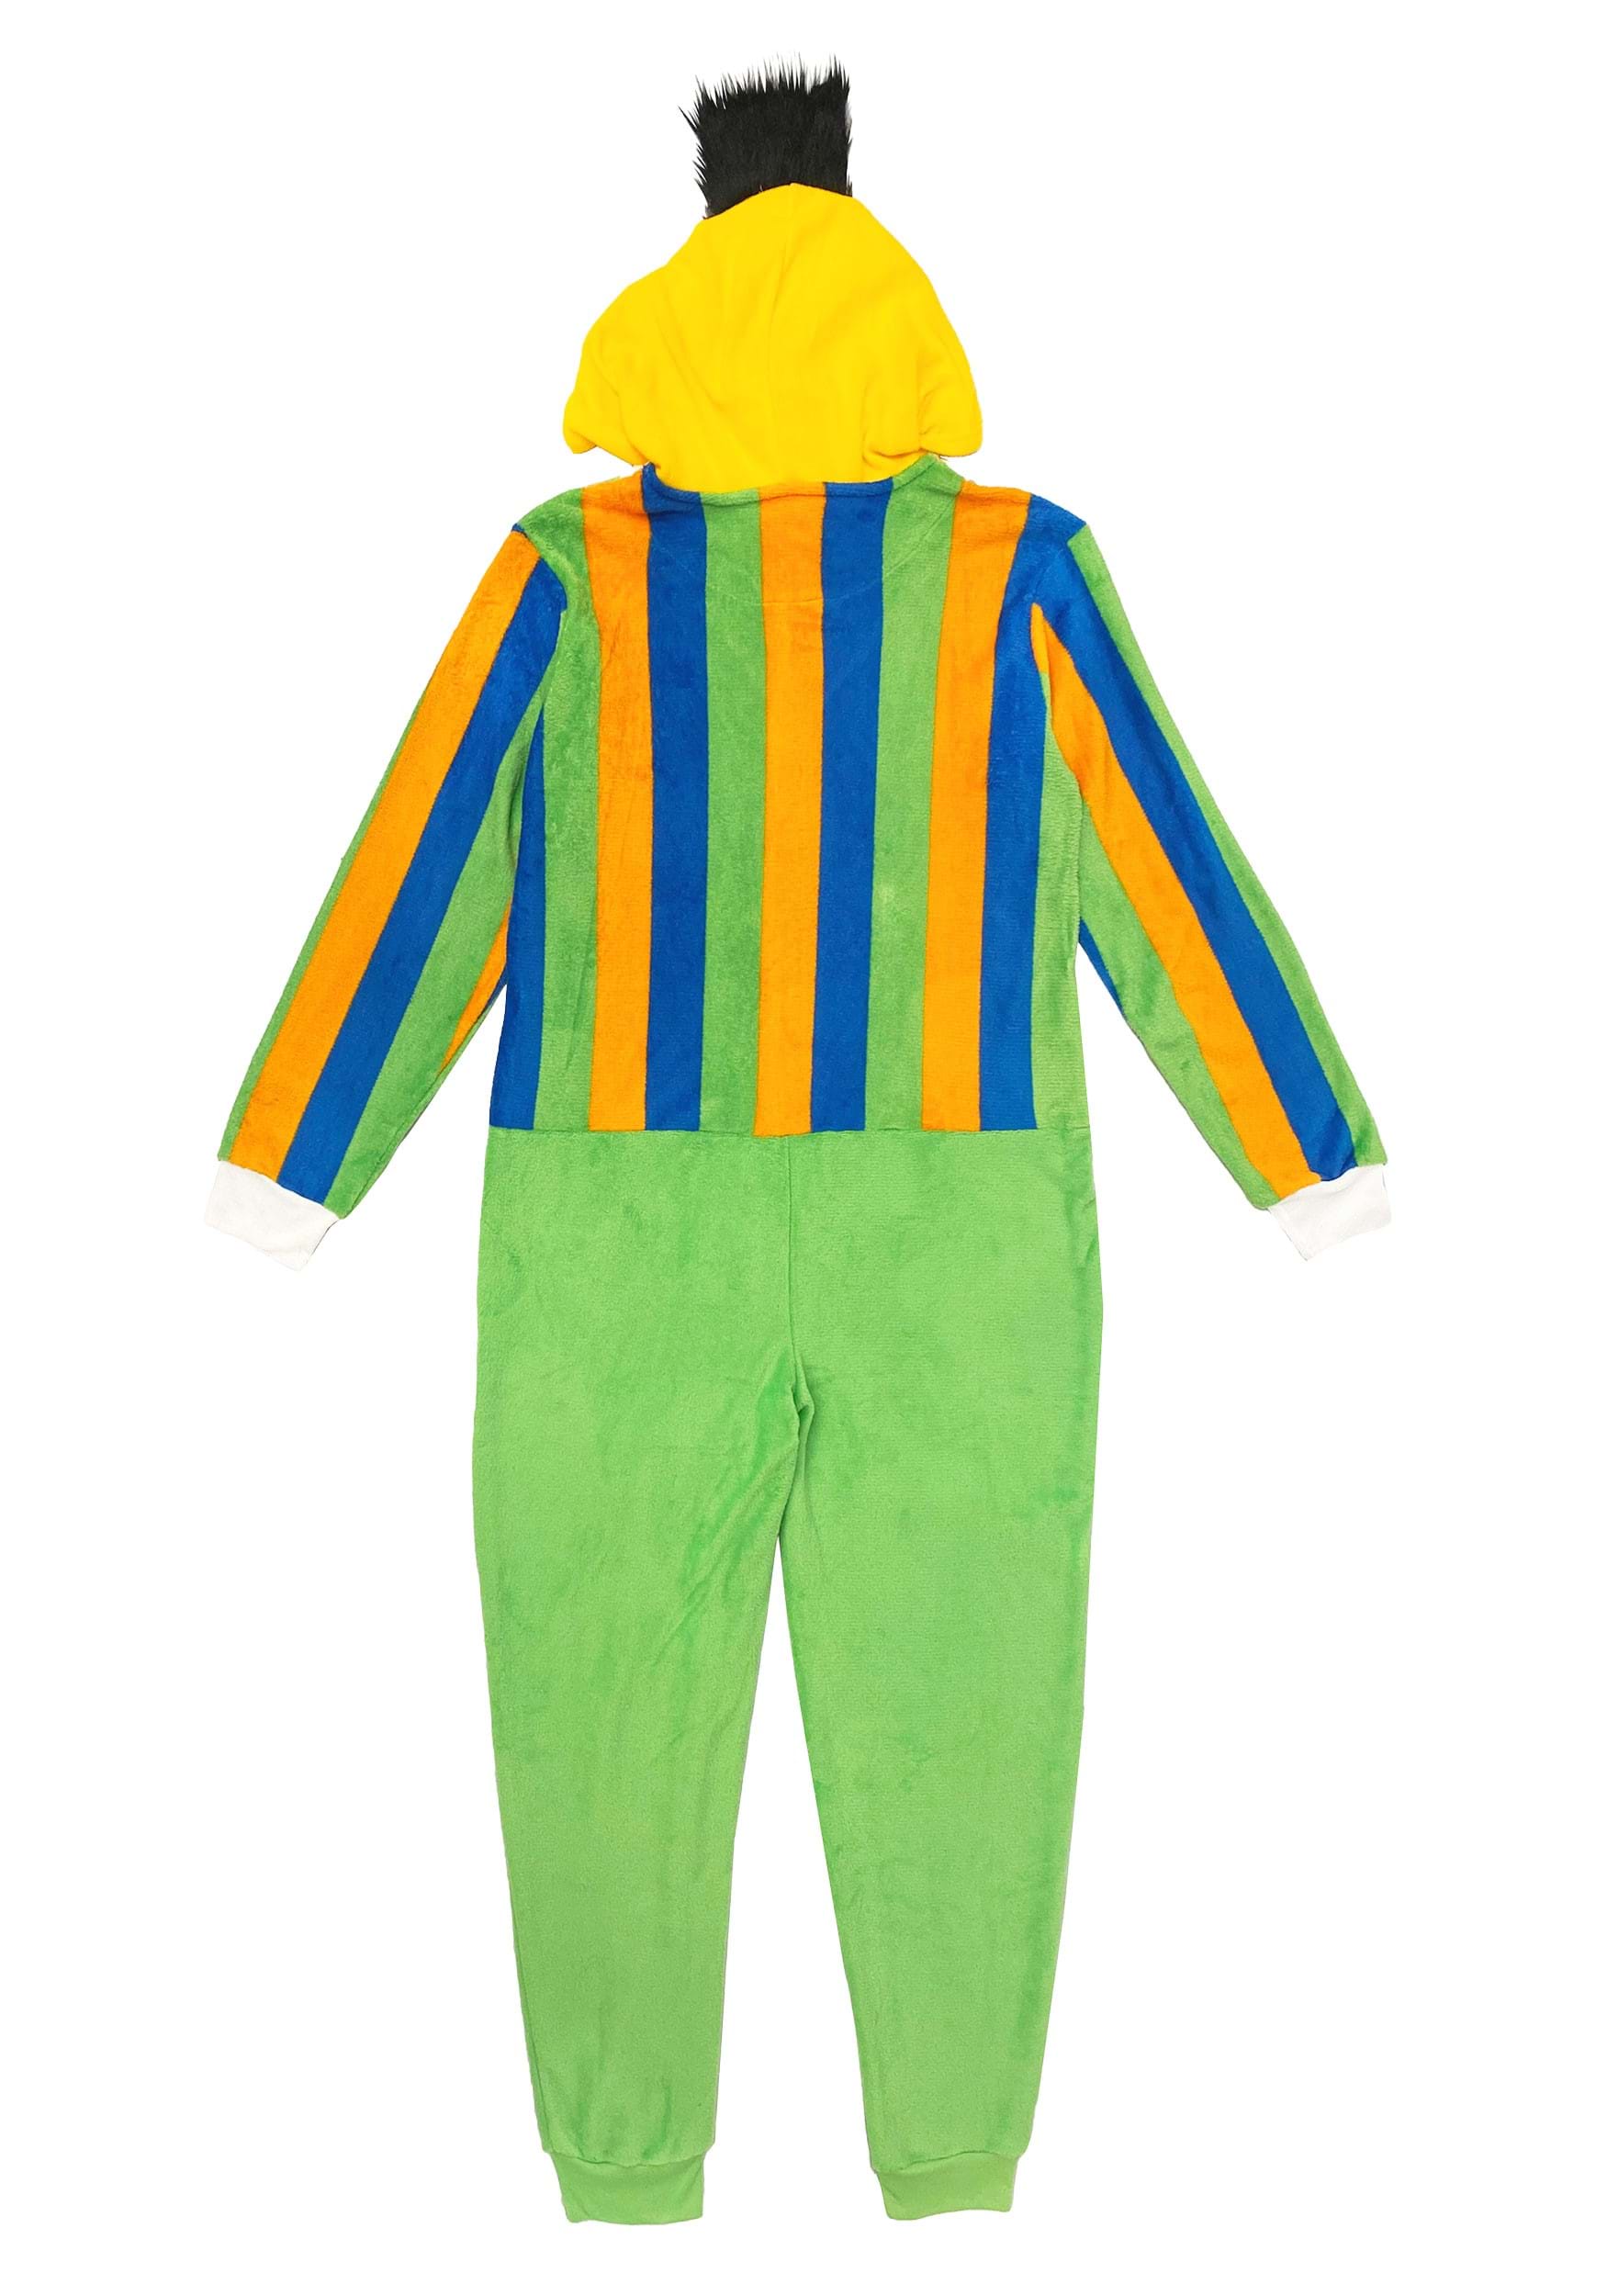 Bert Sesame Street Union Suit , Sesame Street Costumes